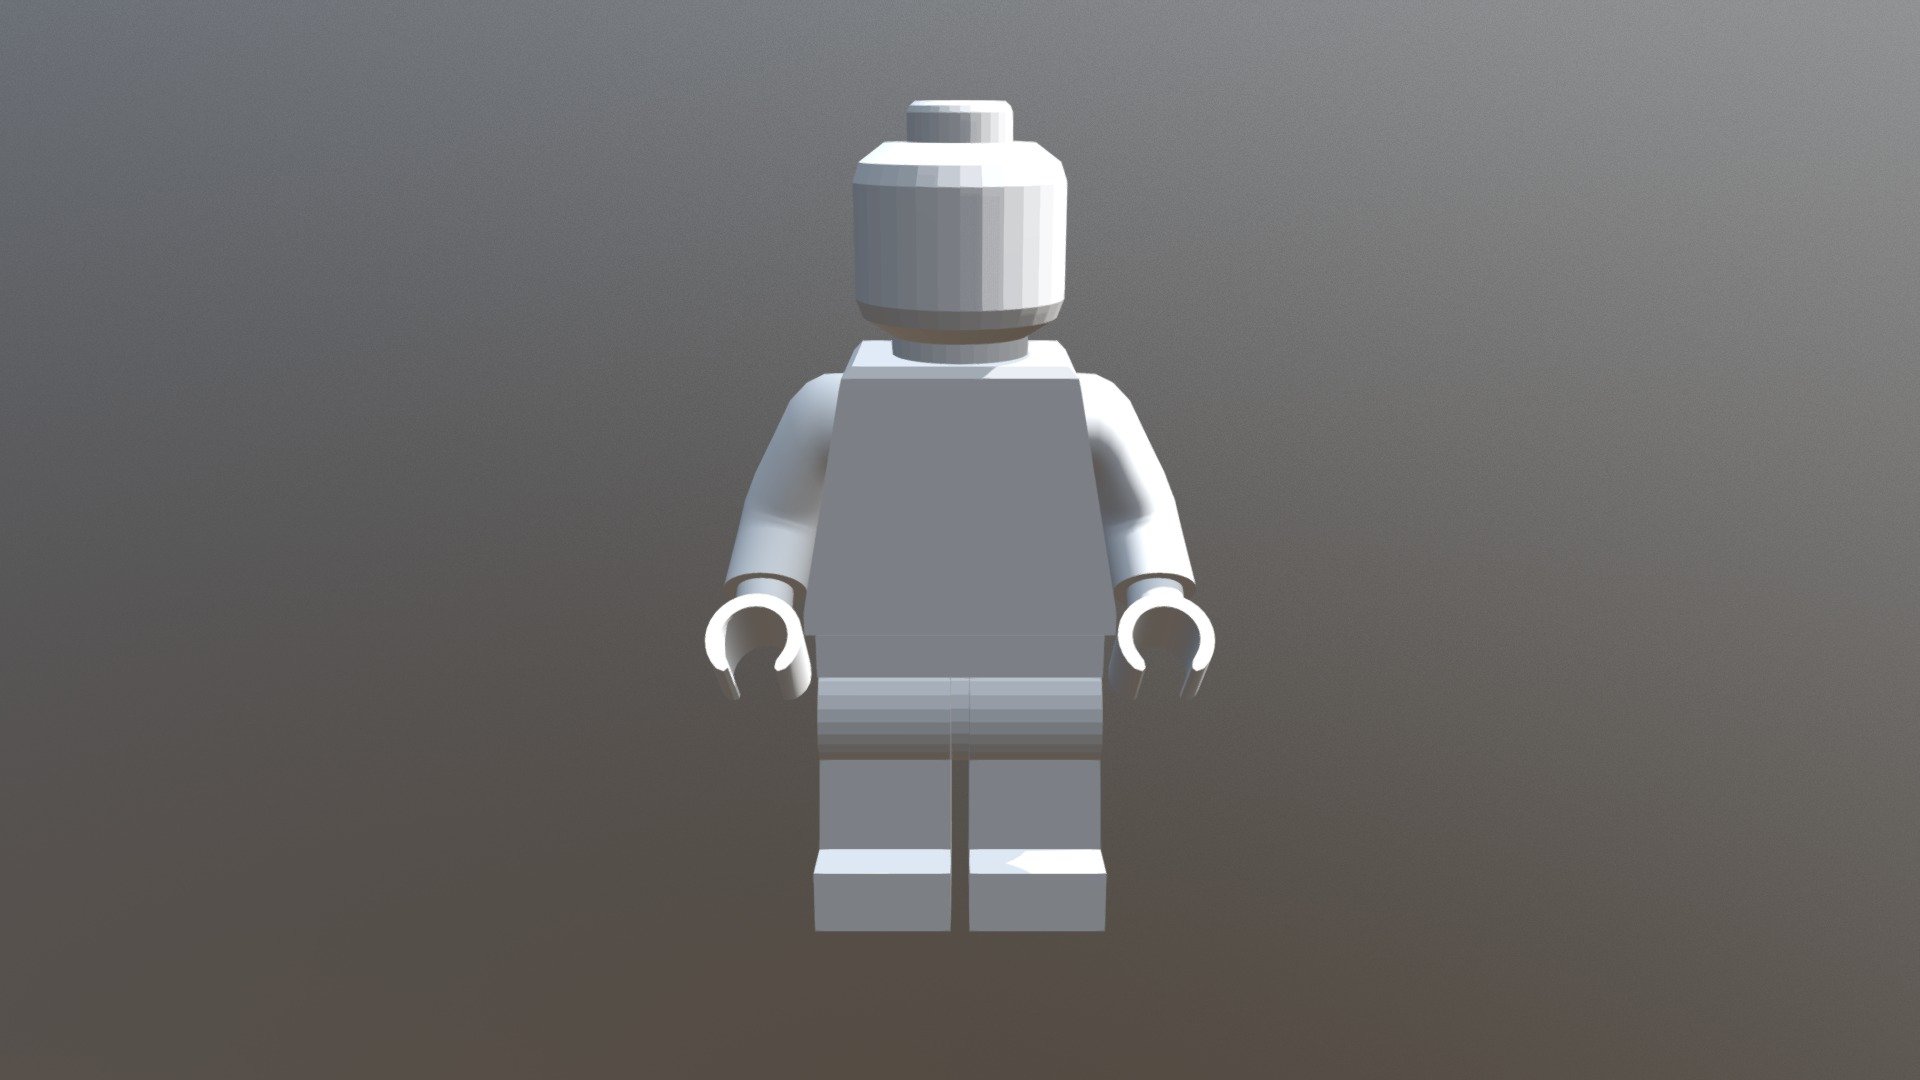 LEGO Minifigure 3D model + PBR Textures